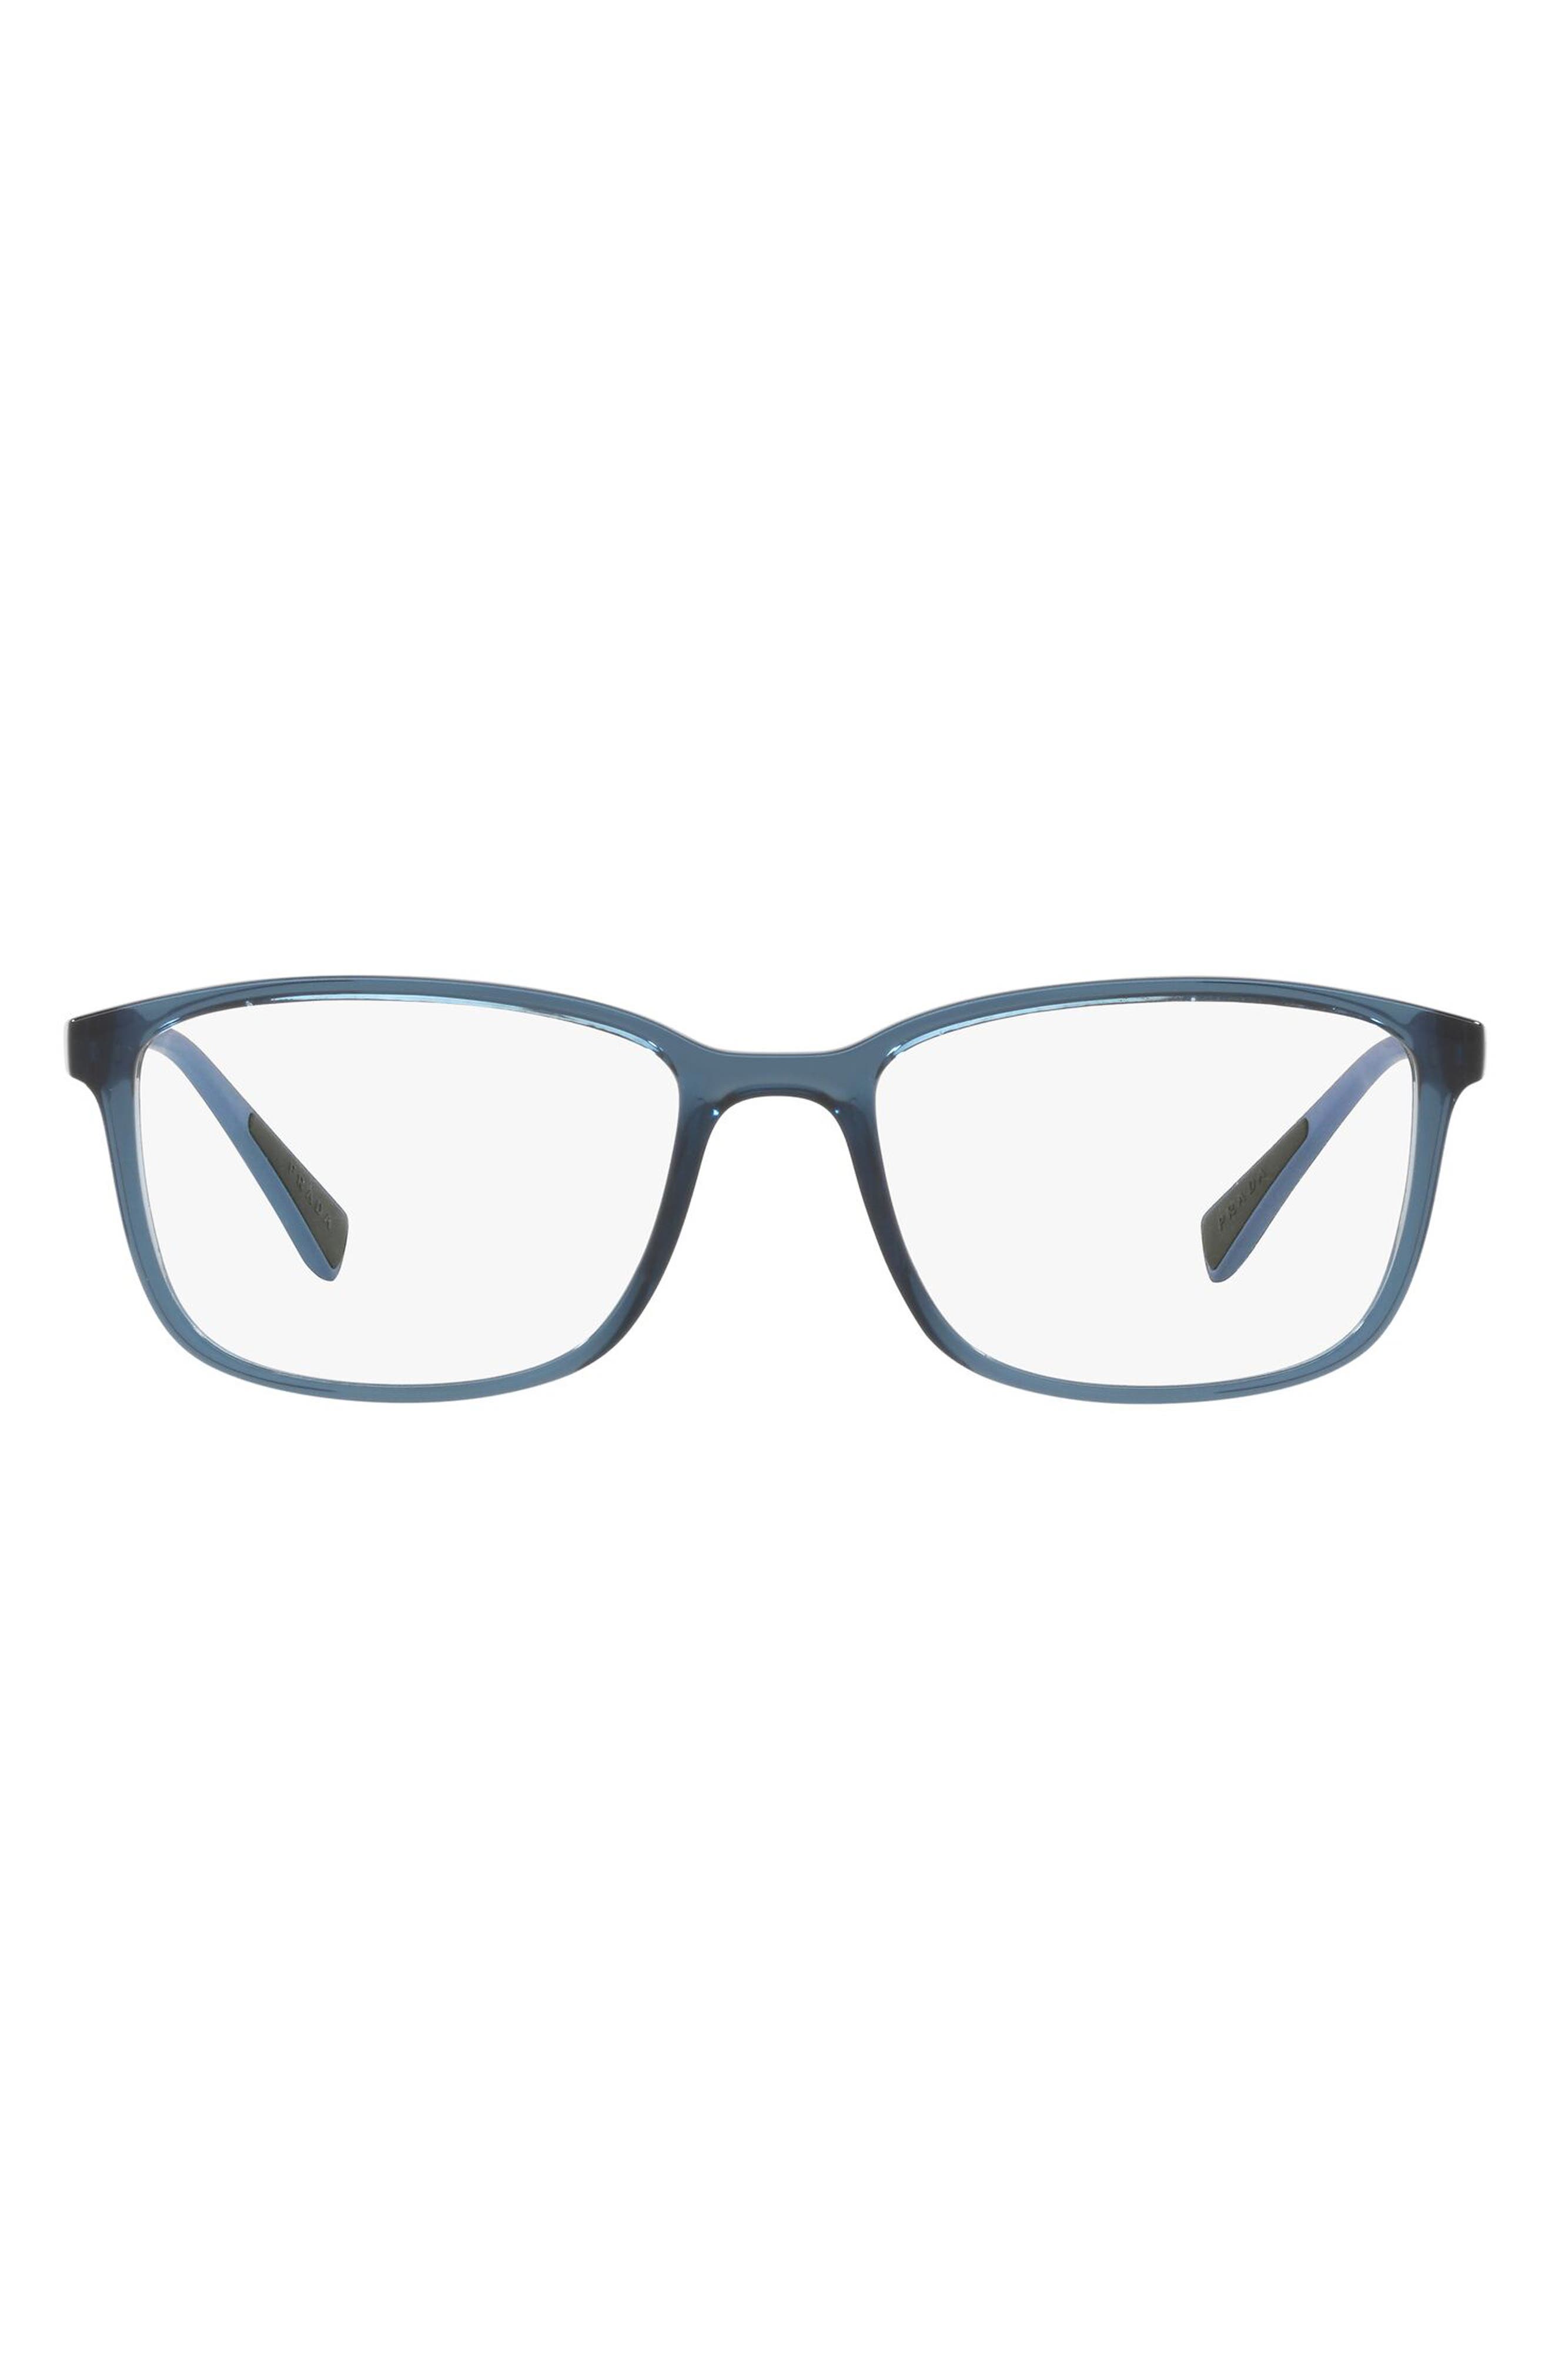 Prada 53mm Rectangle Optical Glasses in Transparent Blue at Nordstrom